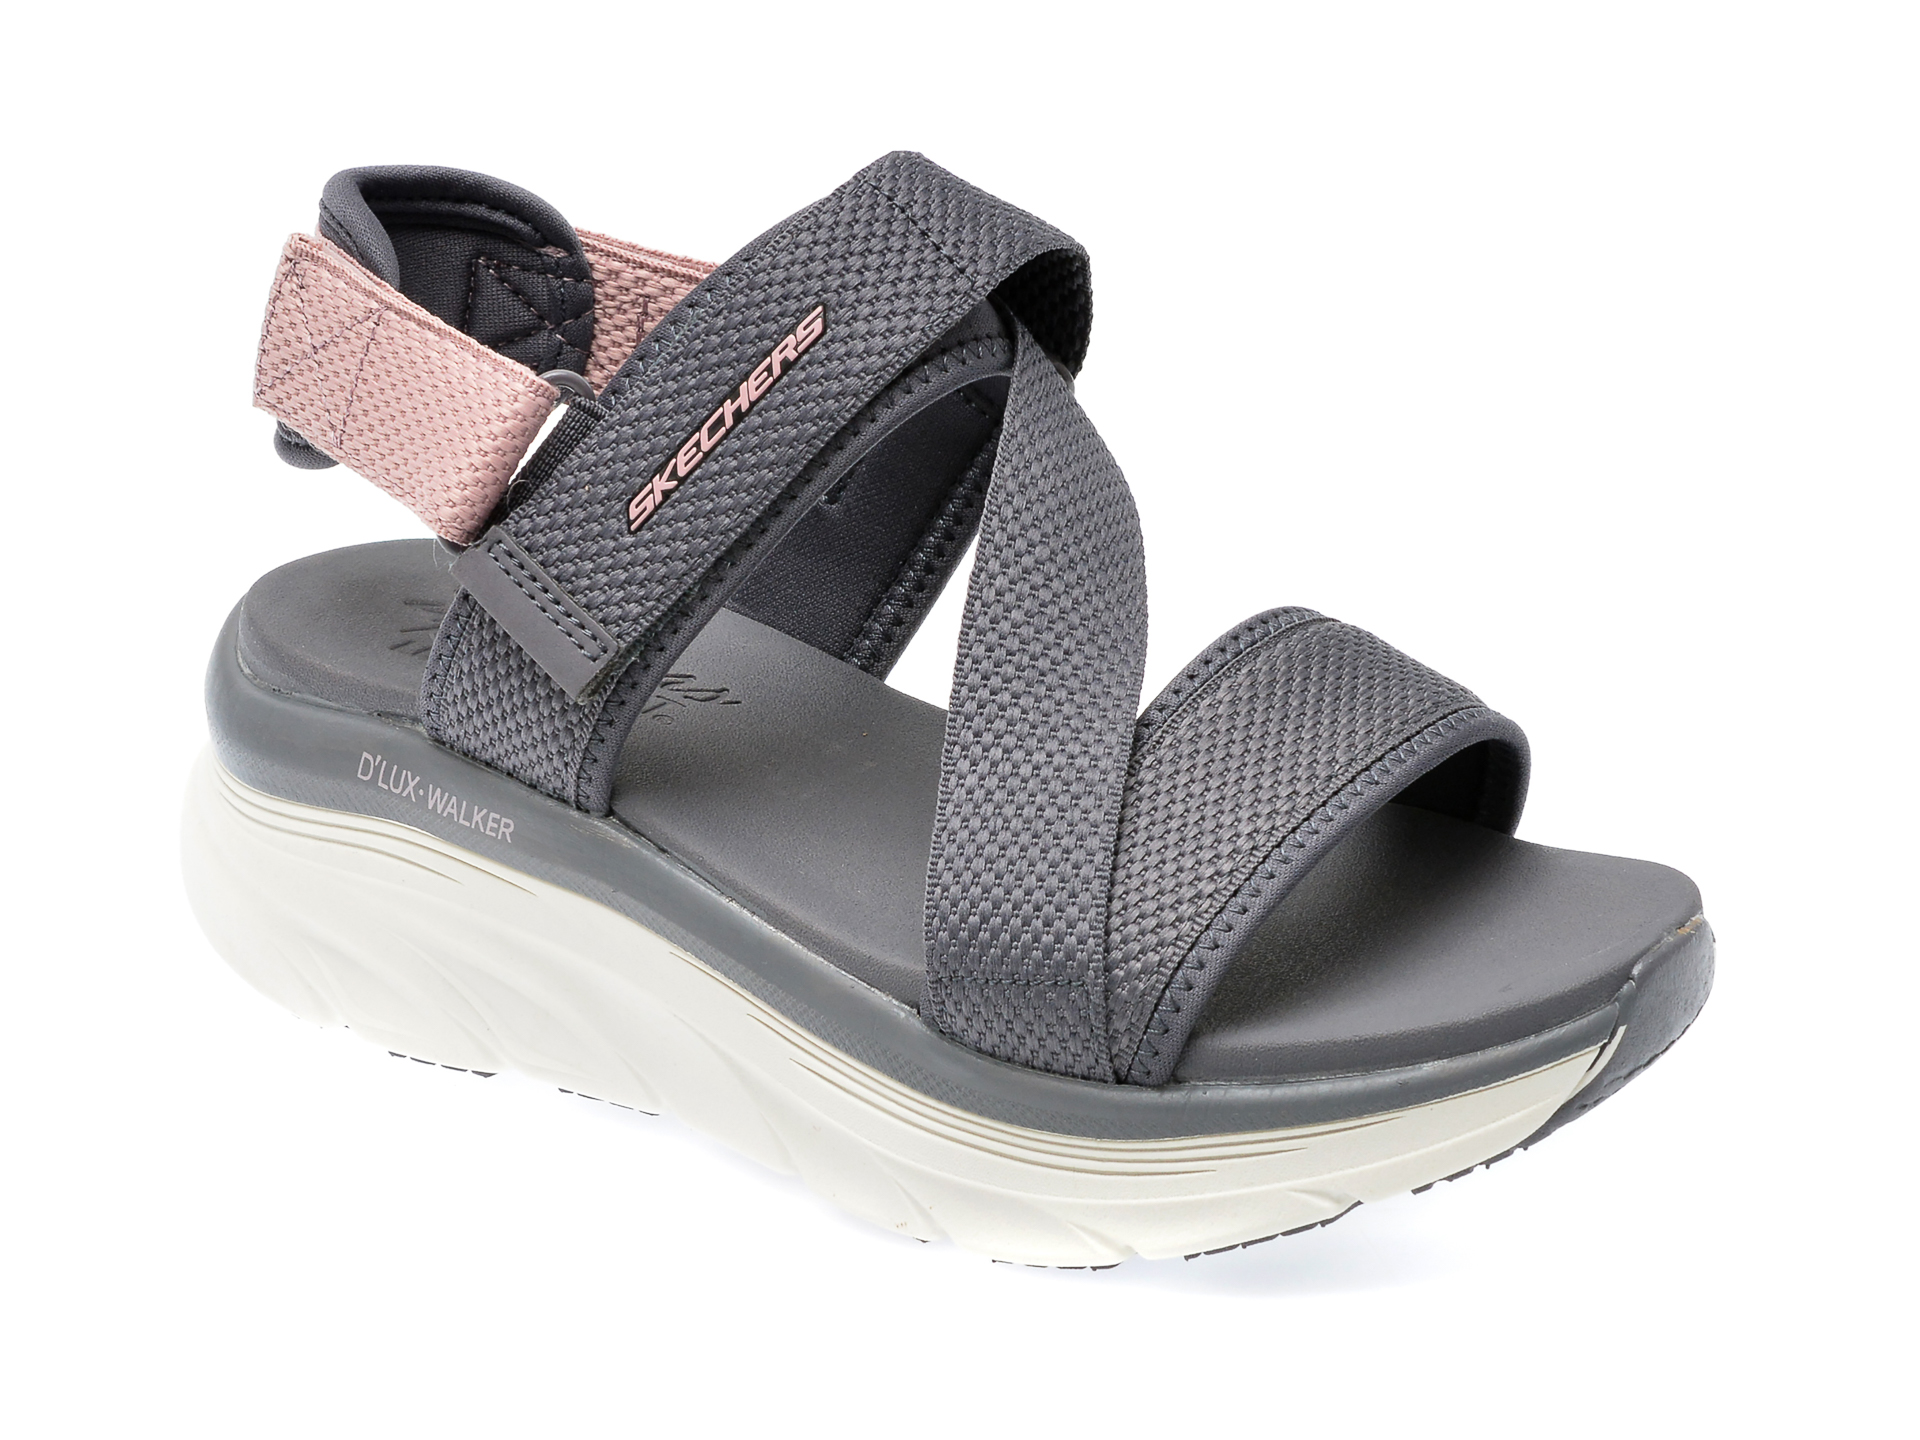 Sandale SKECHERS gri, D LUX WALKER, din material textil Answear 2023-06-09